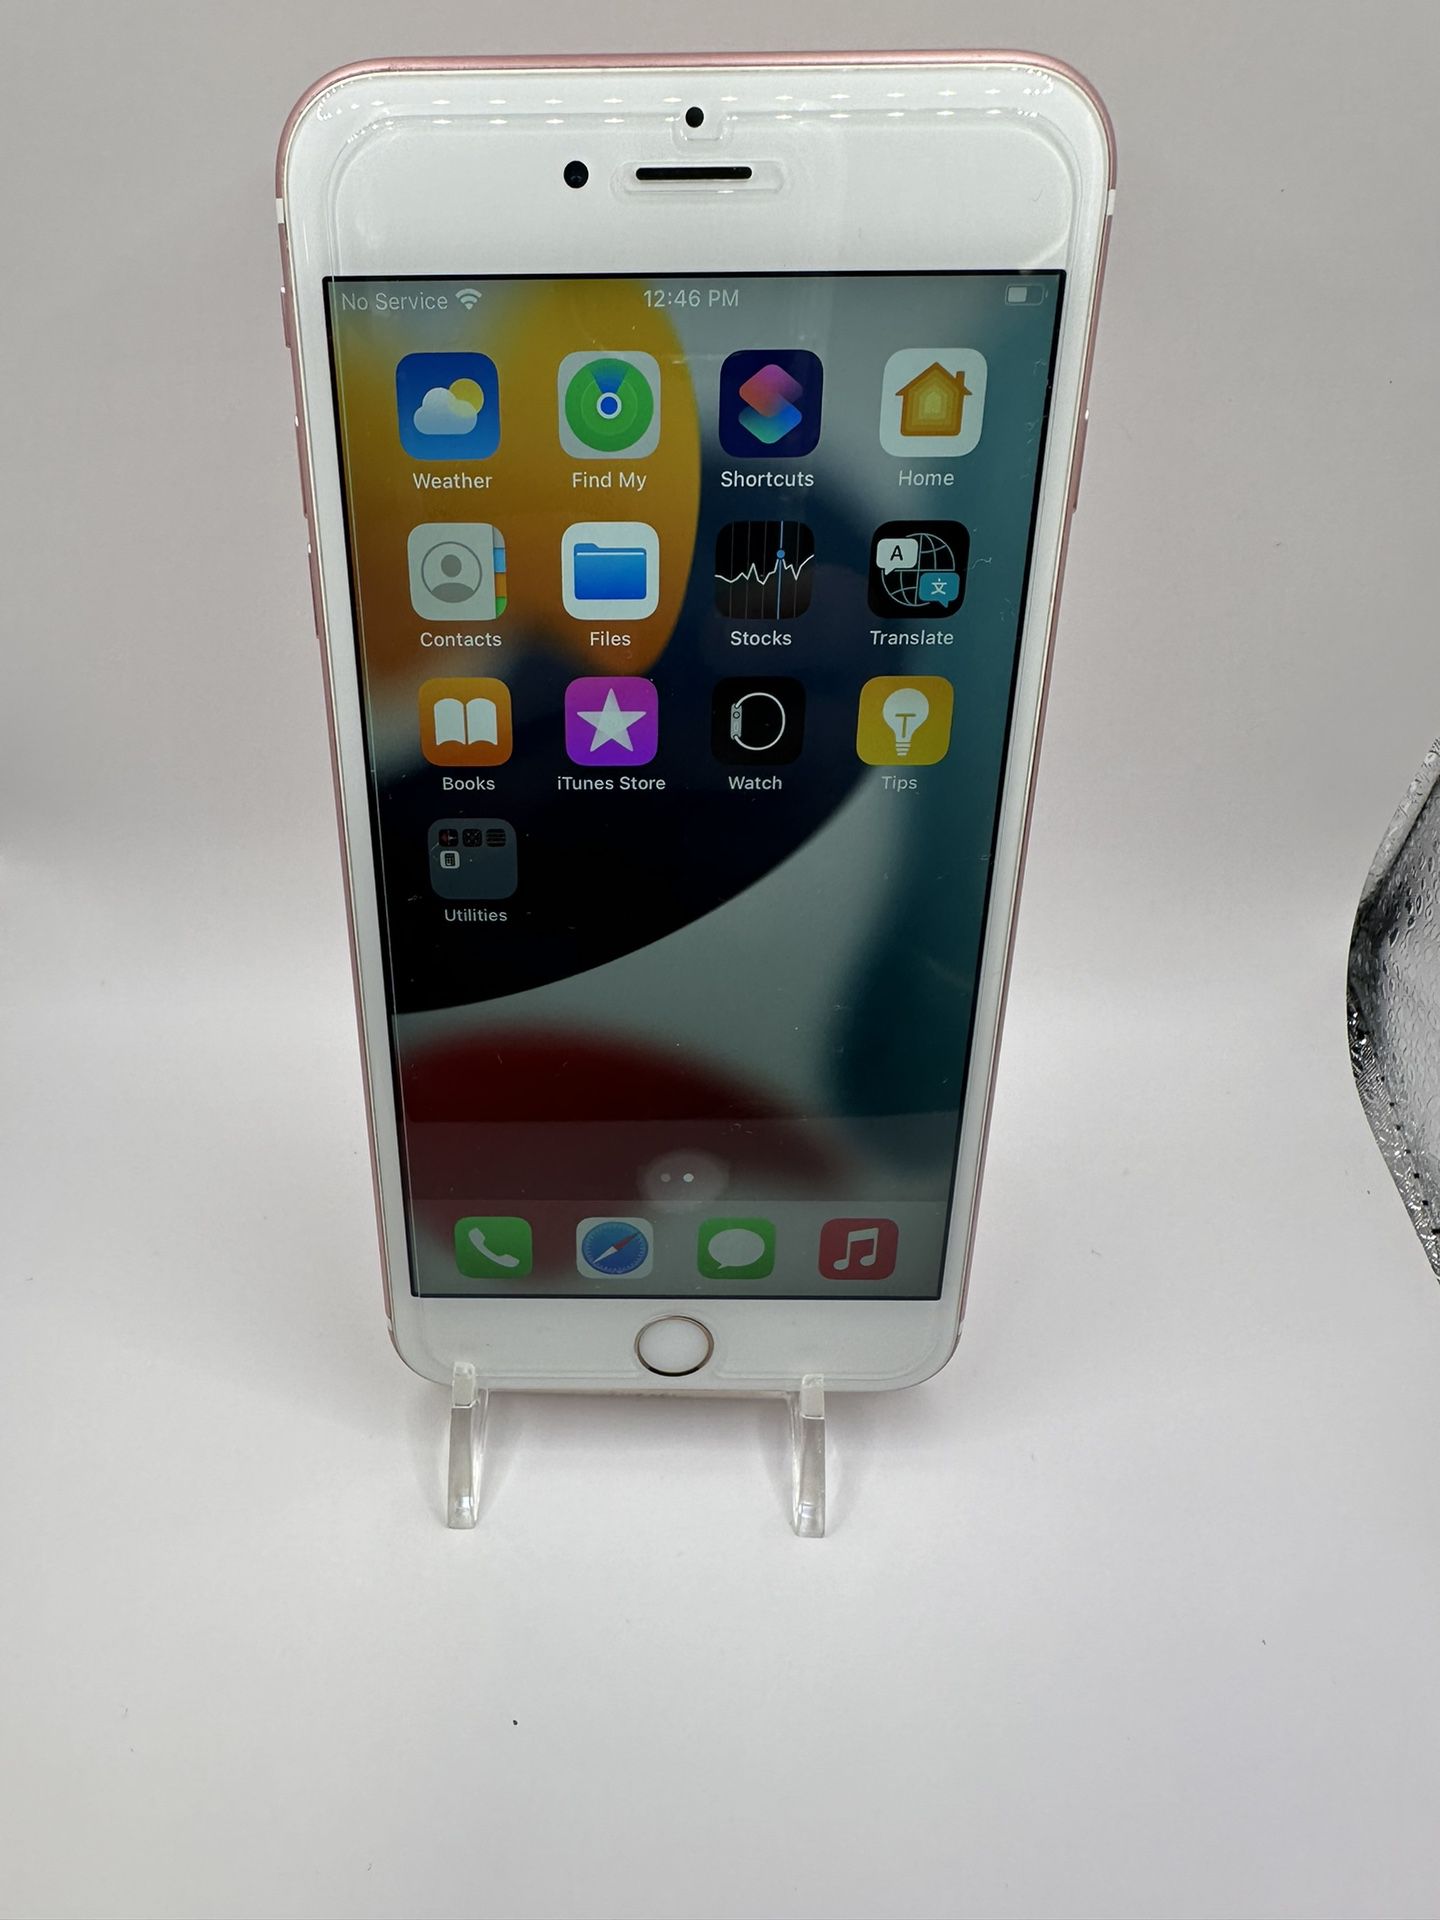 iPhone 6S plus 64gb Unlocked Pink